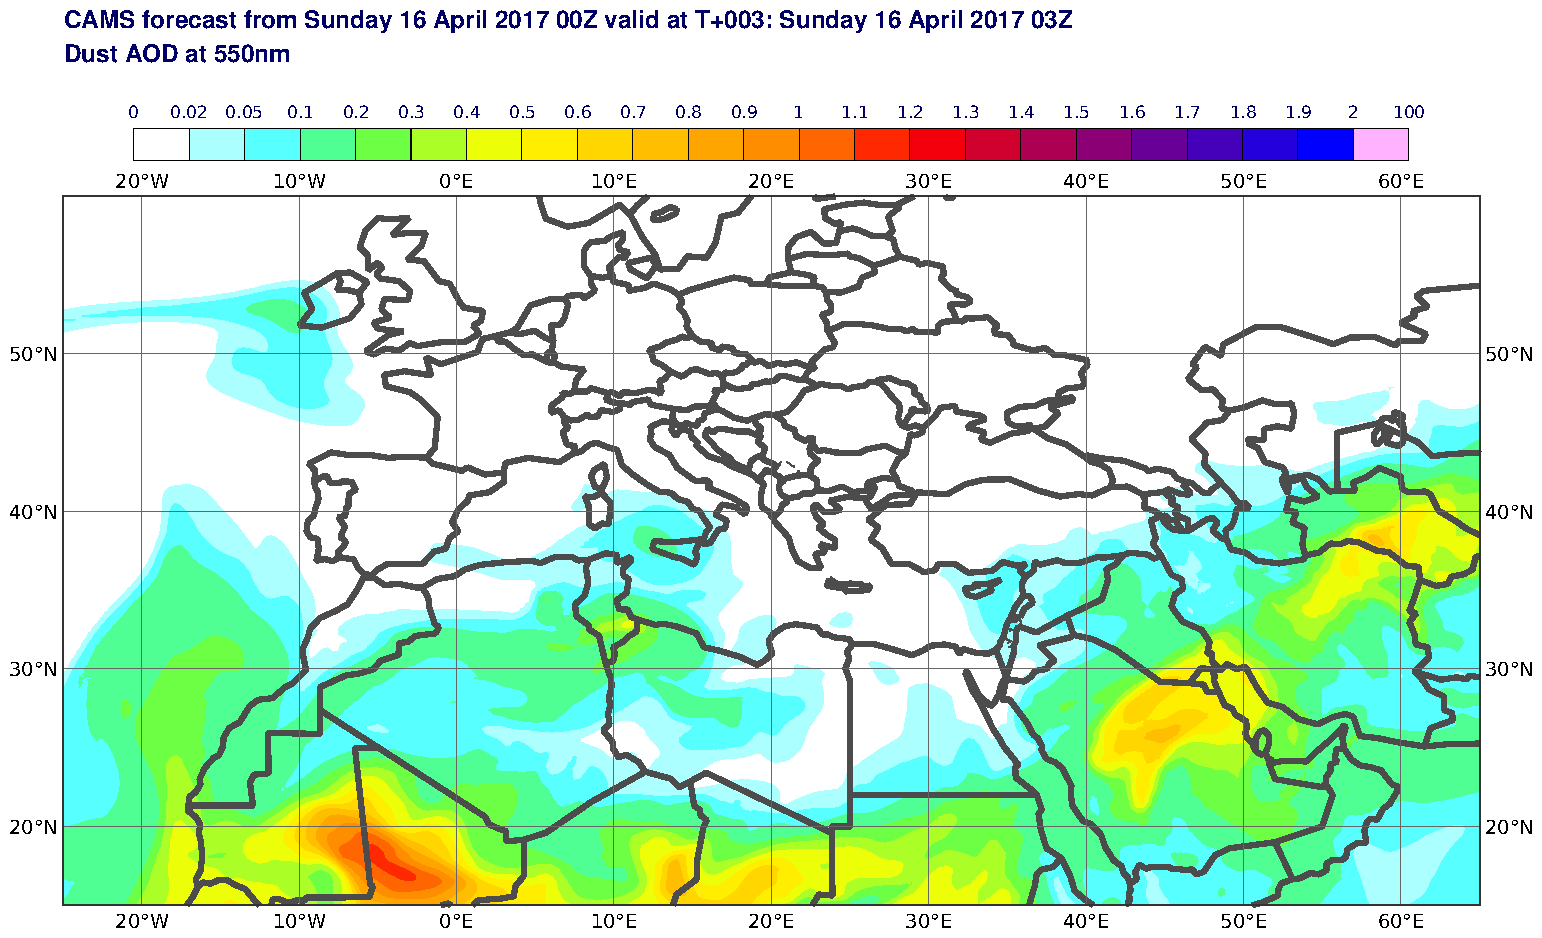 Dust AOD at 550nm valid at T3 - 2017-04-16 03:00